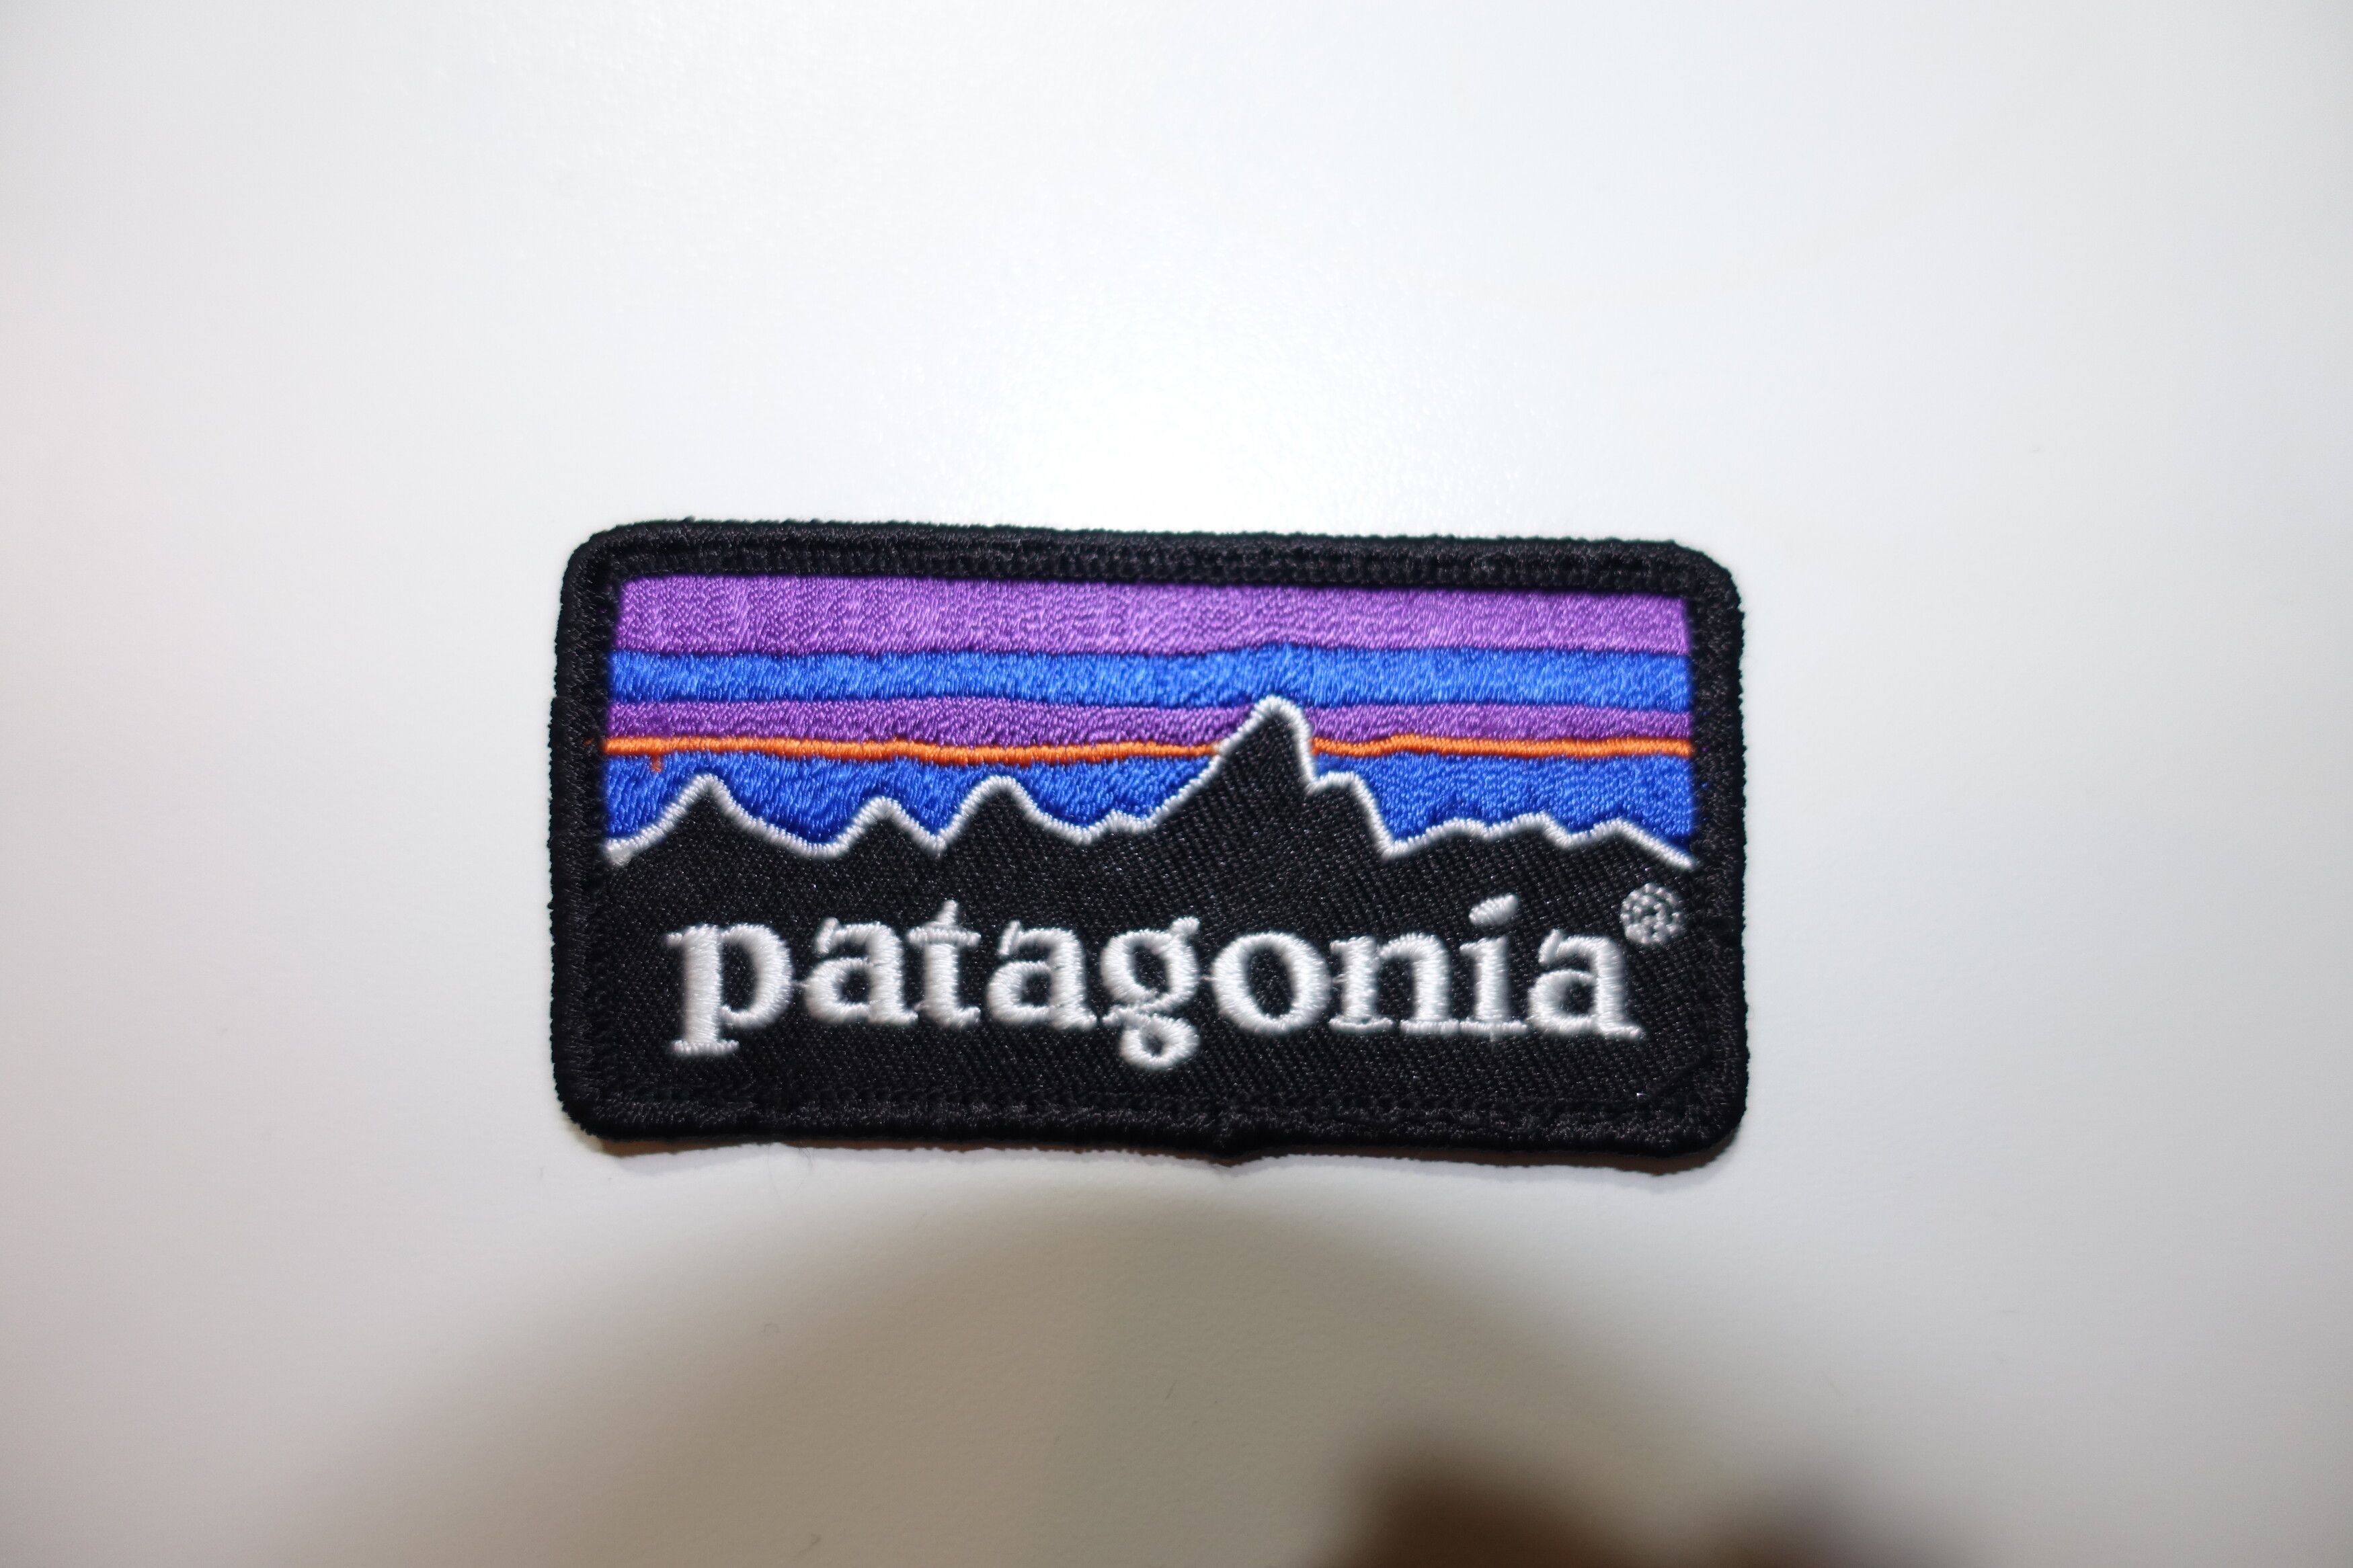 Patagonia Patagonia Patch | Grailed